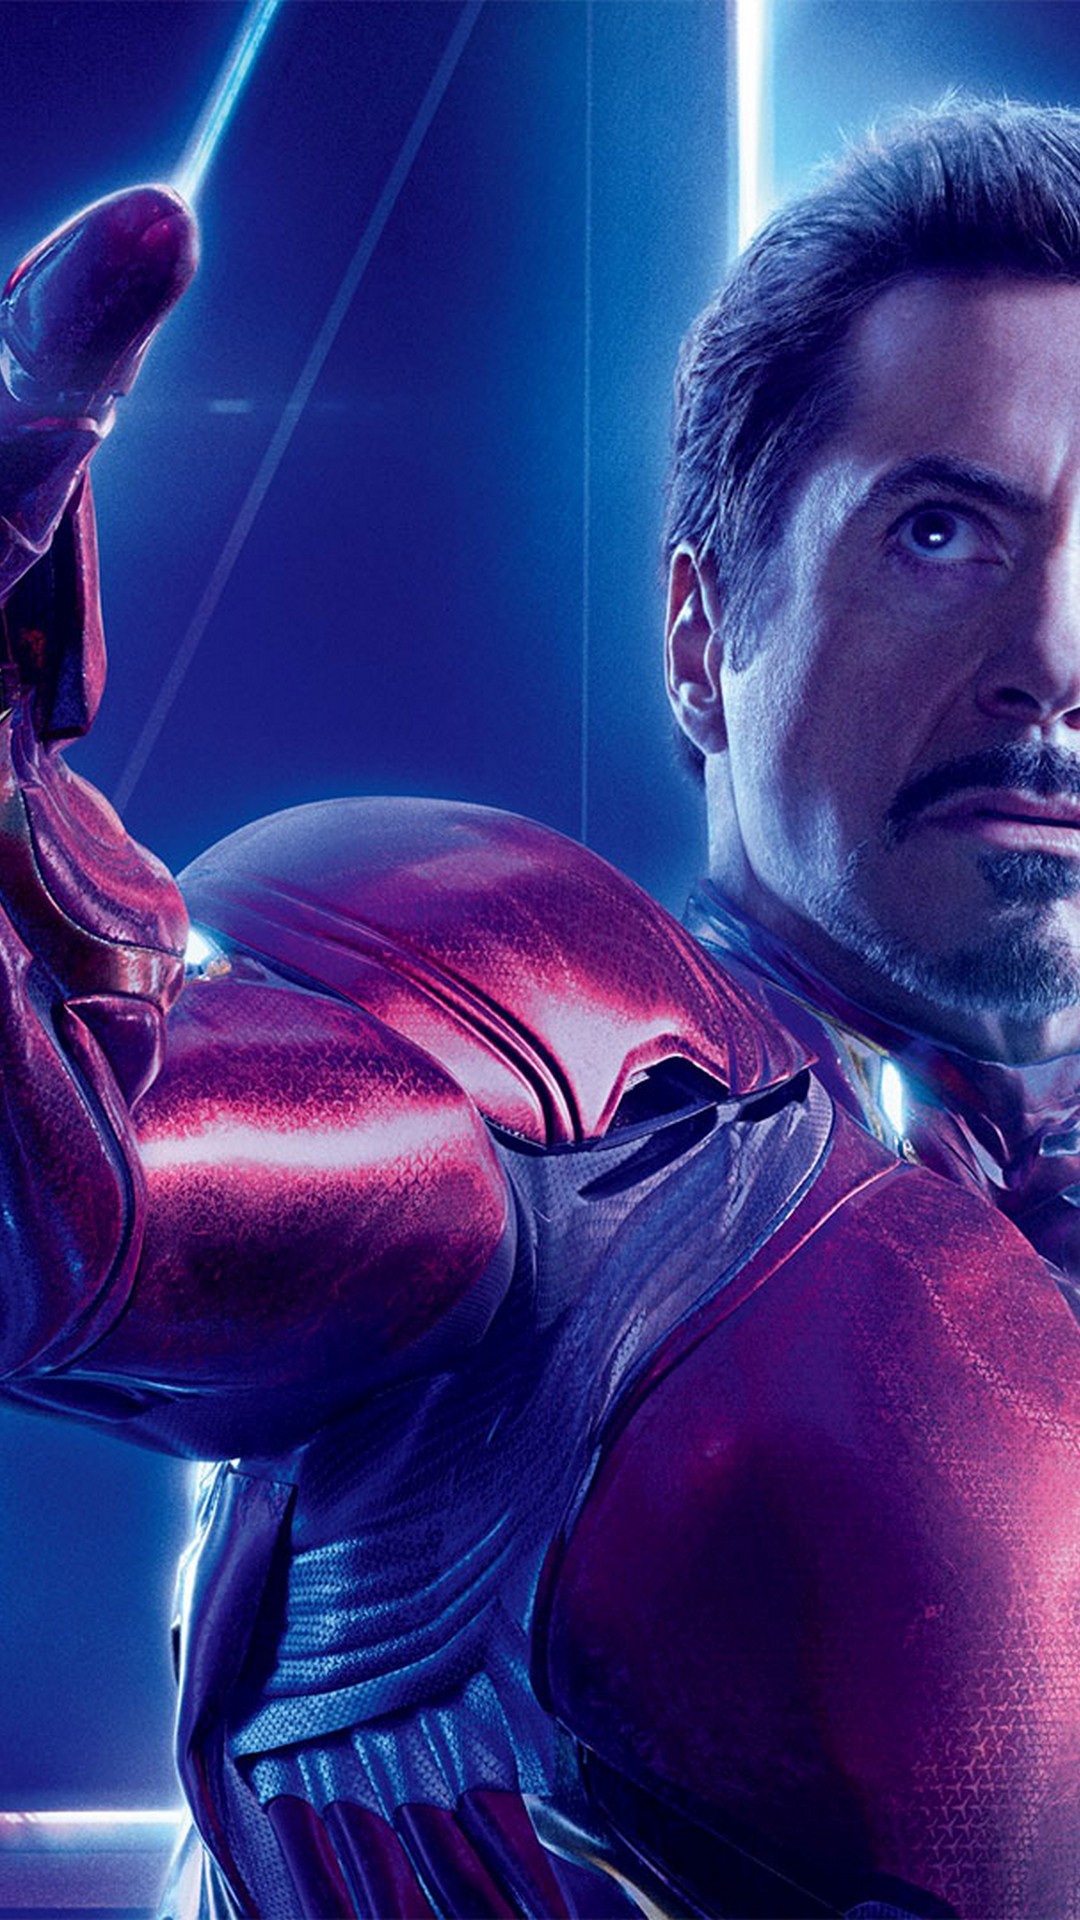 Iron Man Avengers Endgame iPhone Wallpaper 2019 Movie Poster